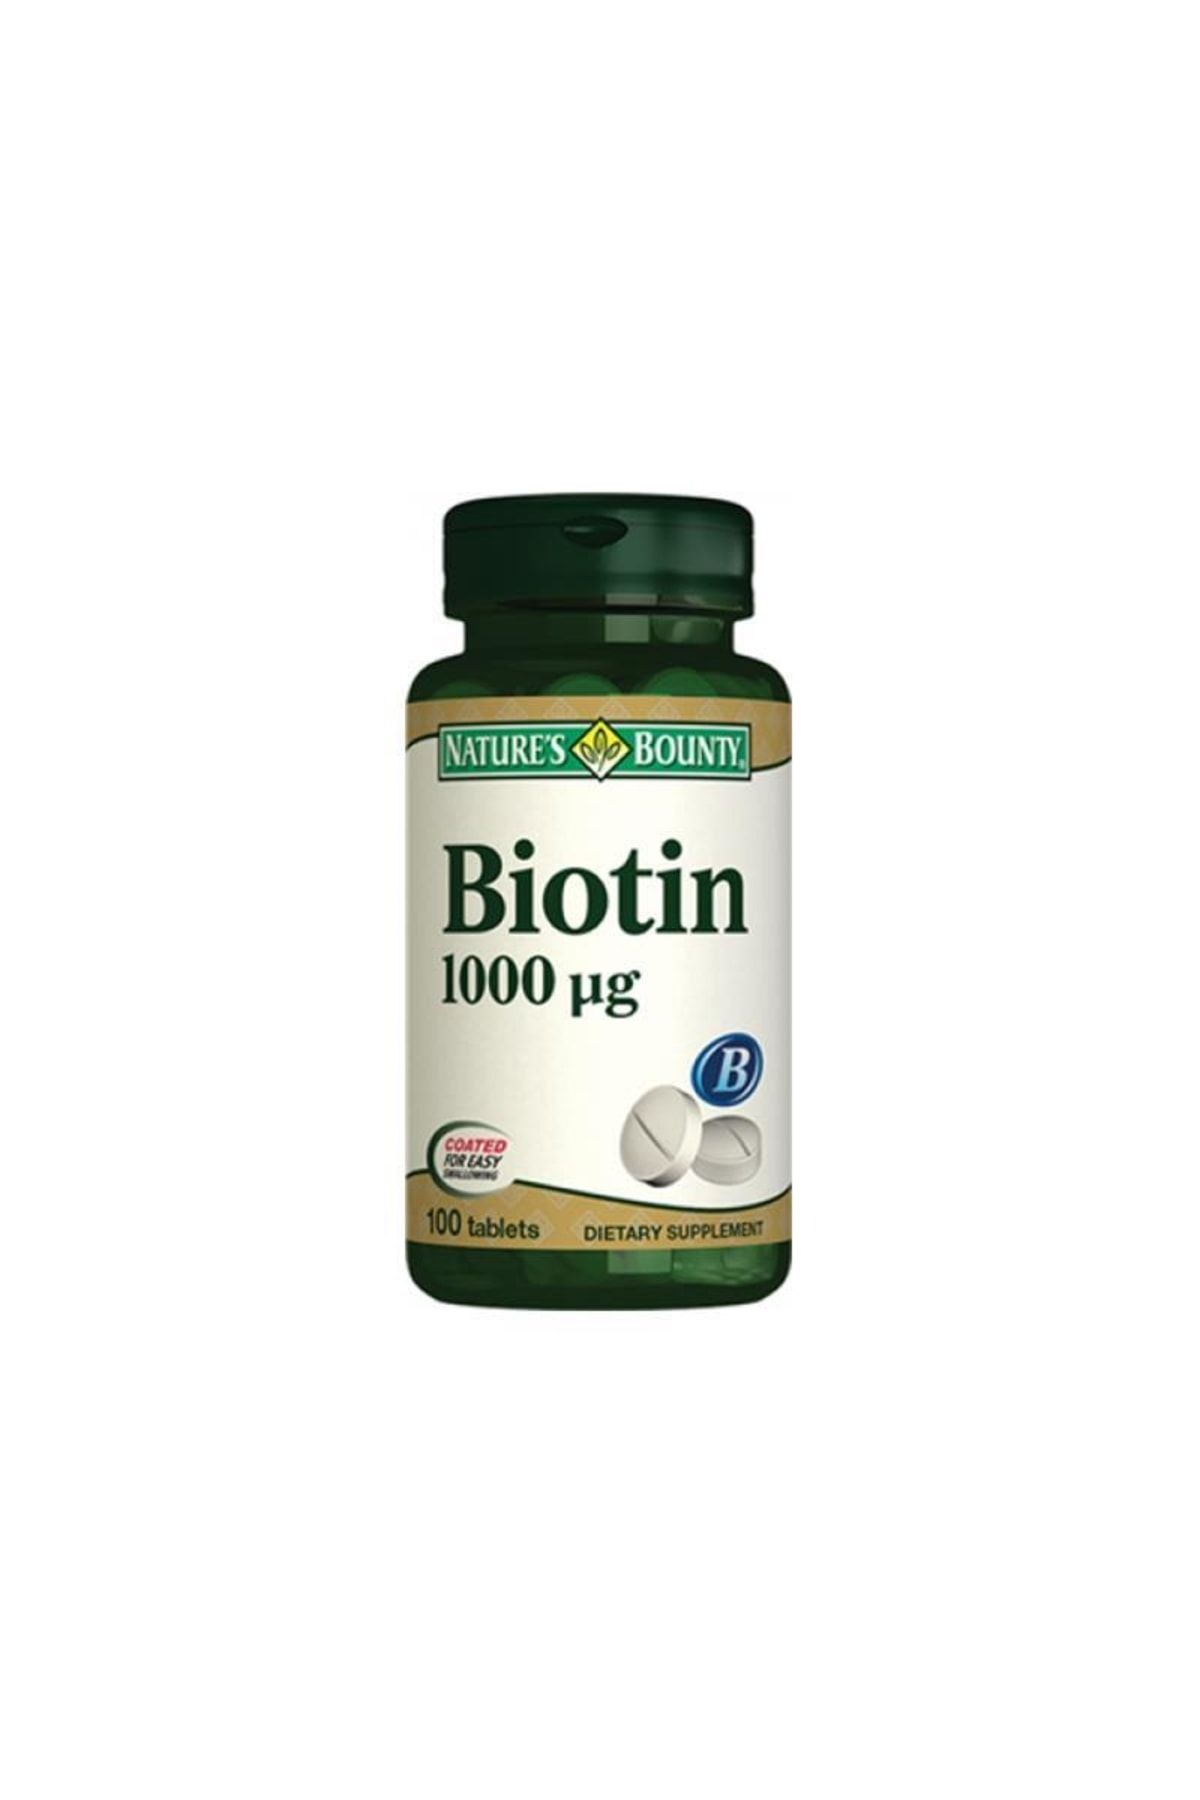 Natures Bounty Biotin 1000 Mcg 100 Tablet